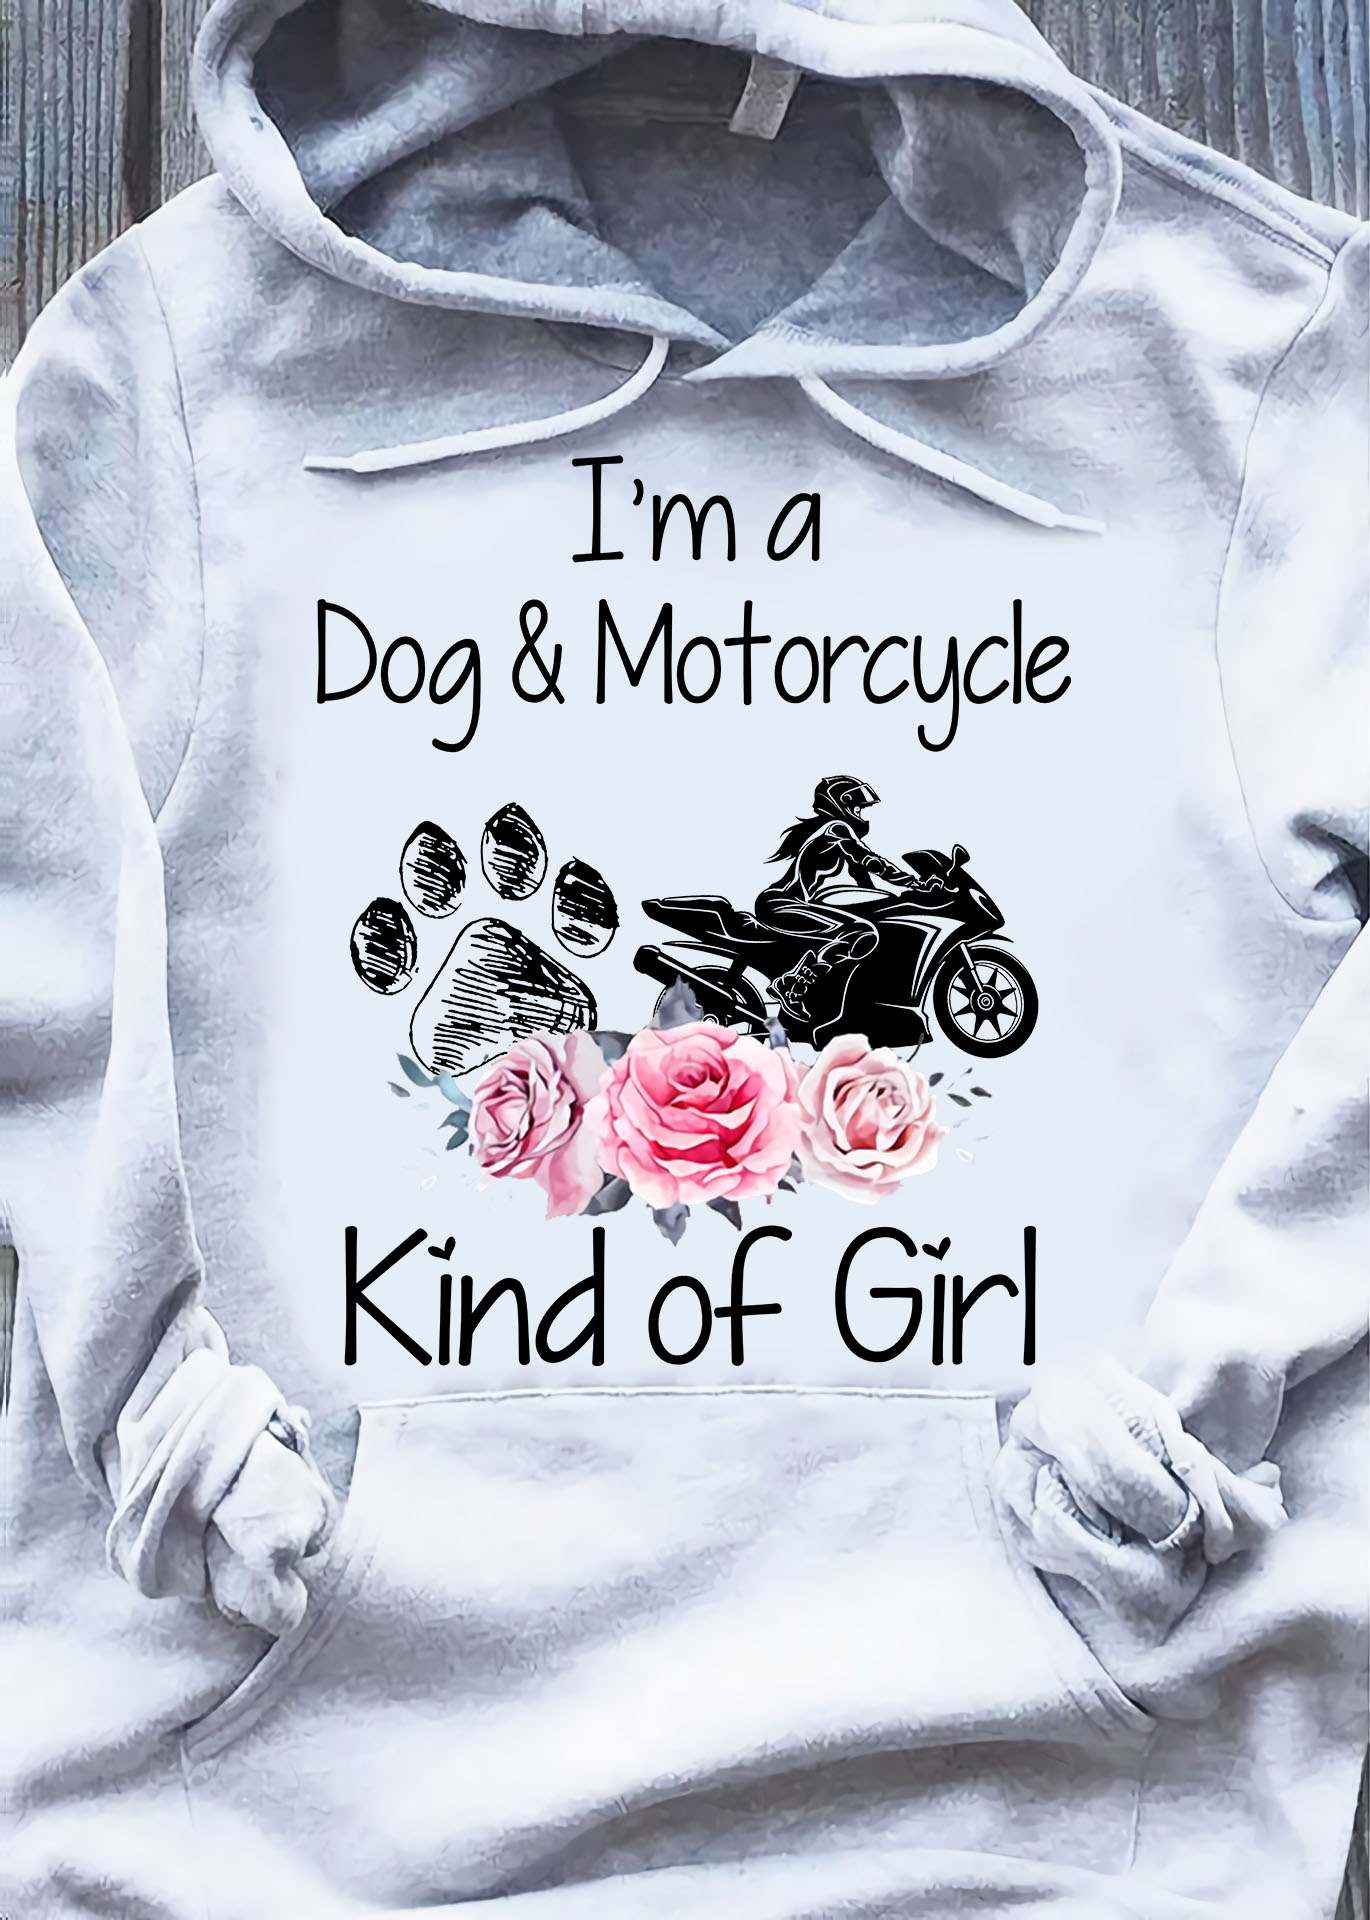 Dog Motorcycle – I'm a dog motorcycle kind of girl